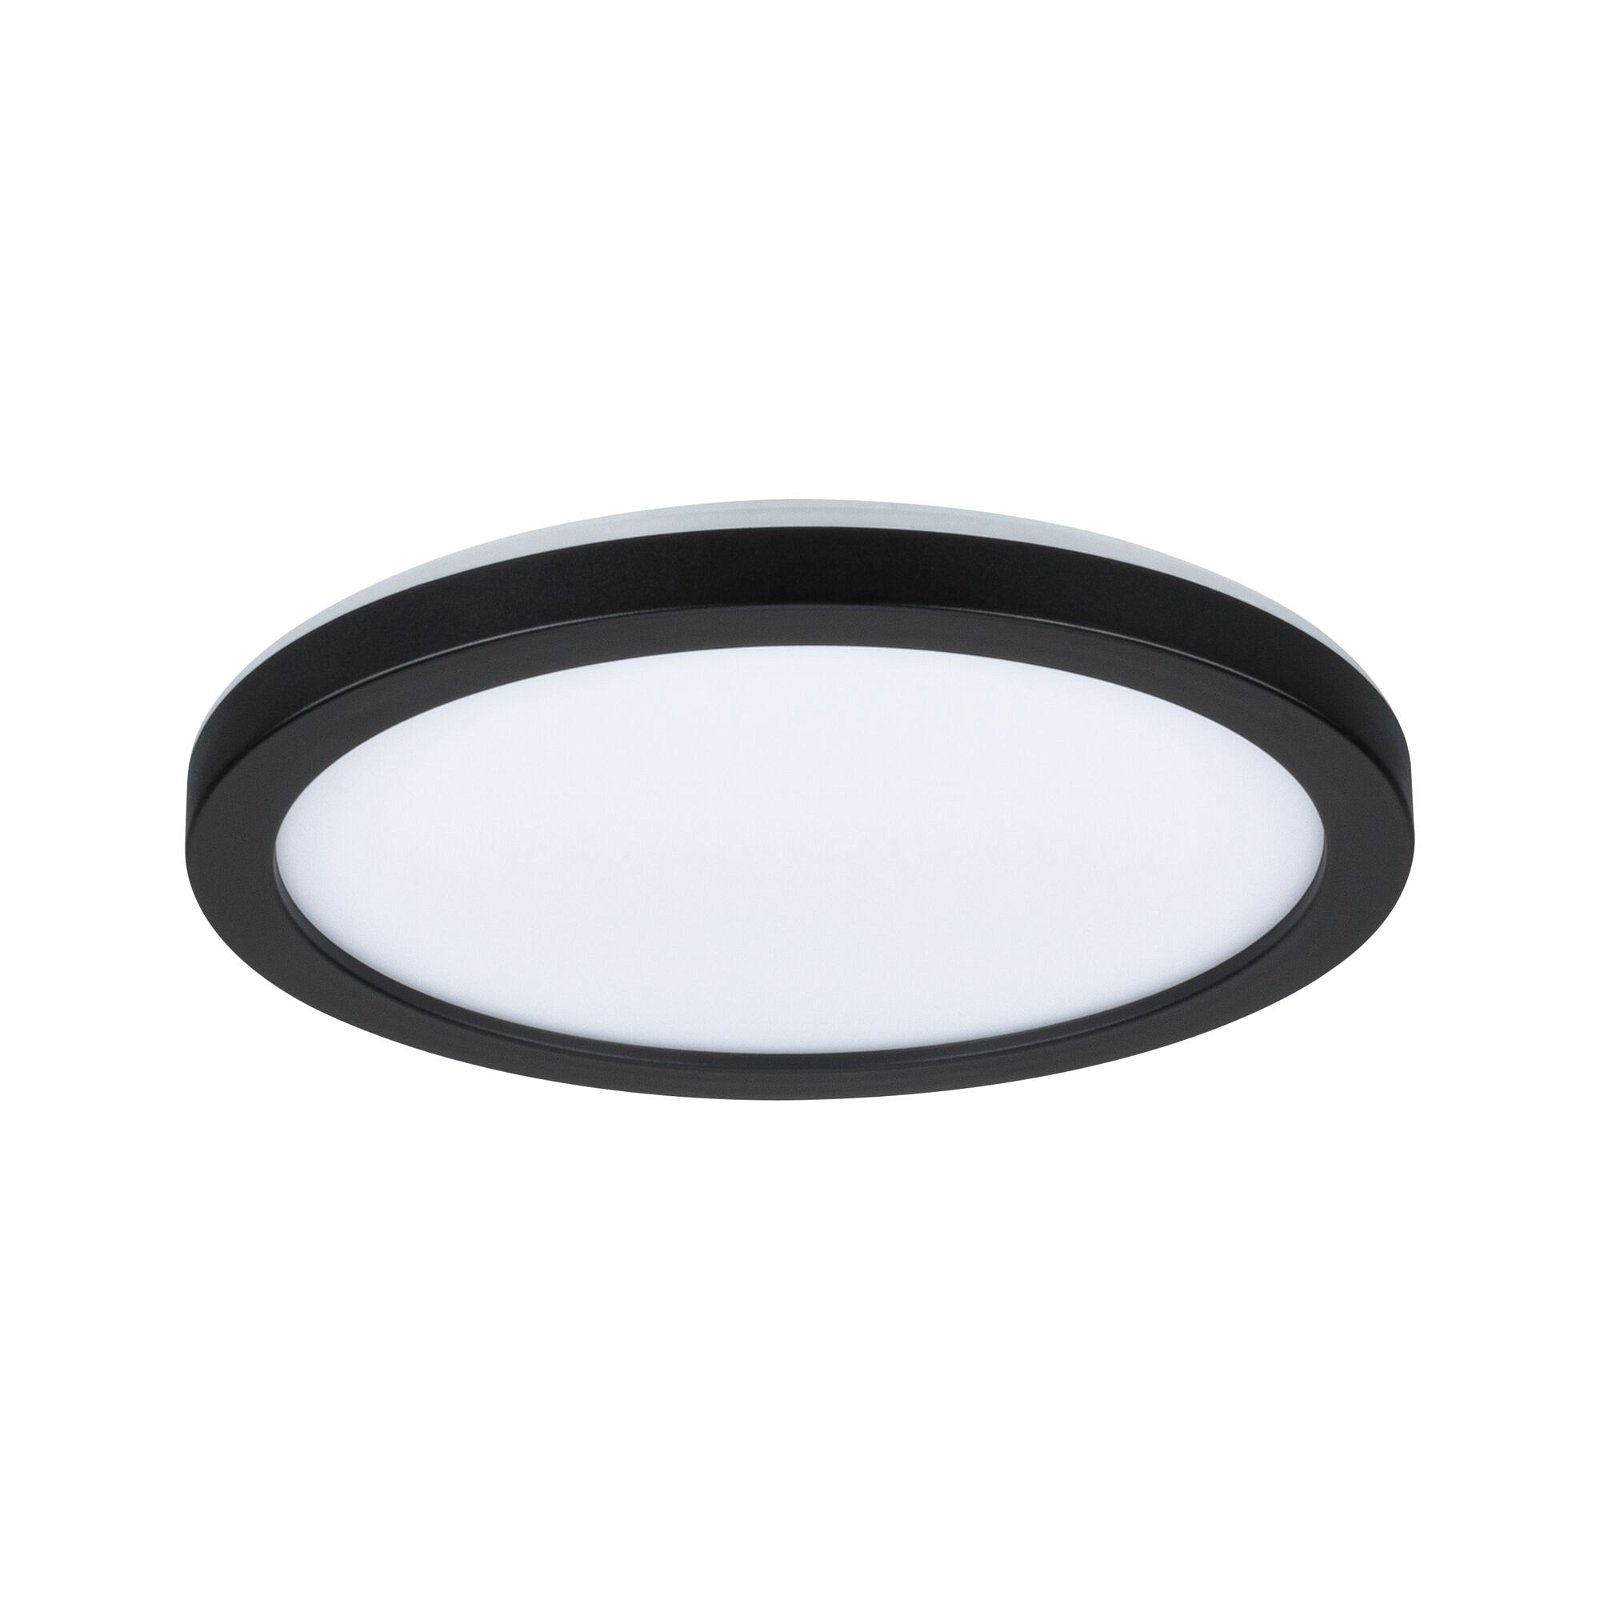 LED Panel Atria Shine Backlight round 190mm 11,2W 850lm 3000K Black